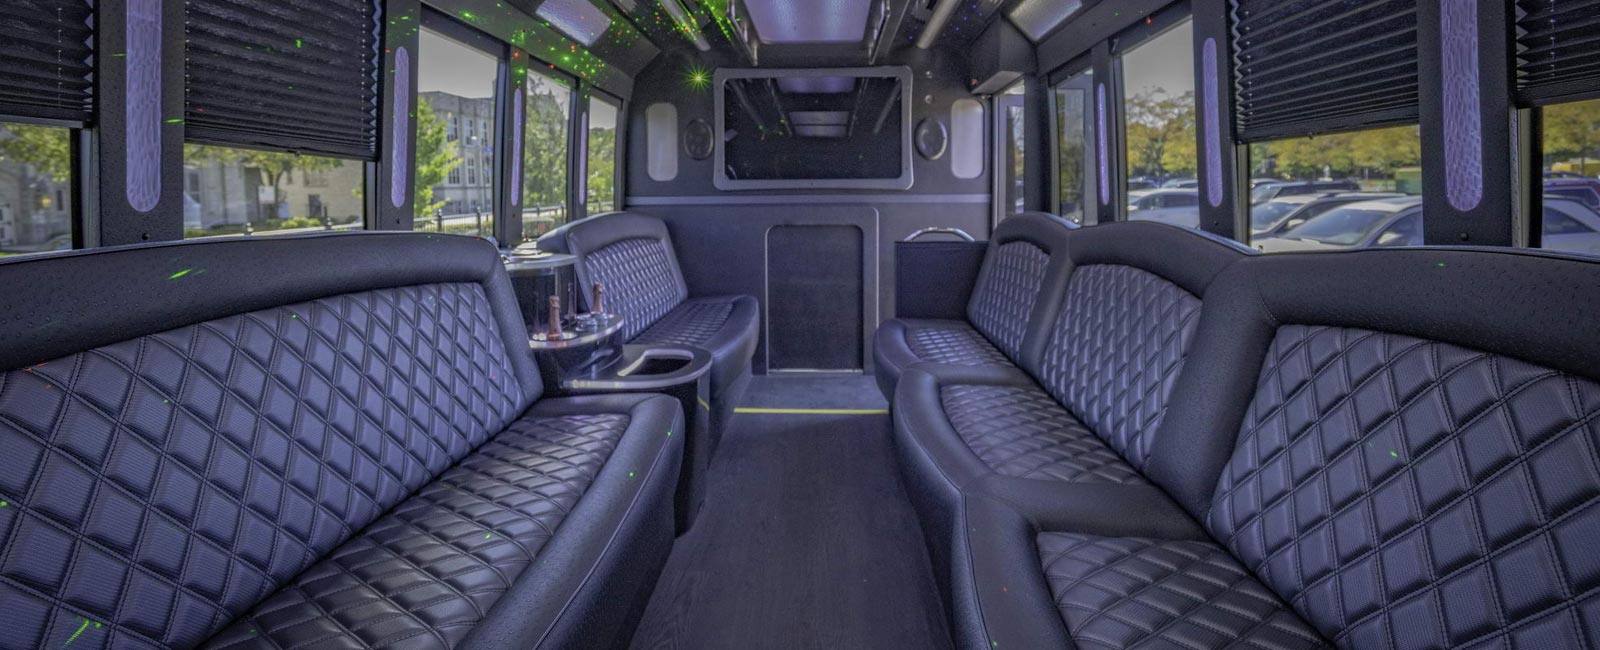 20 Passenger Limo Bus Conversion Interior